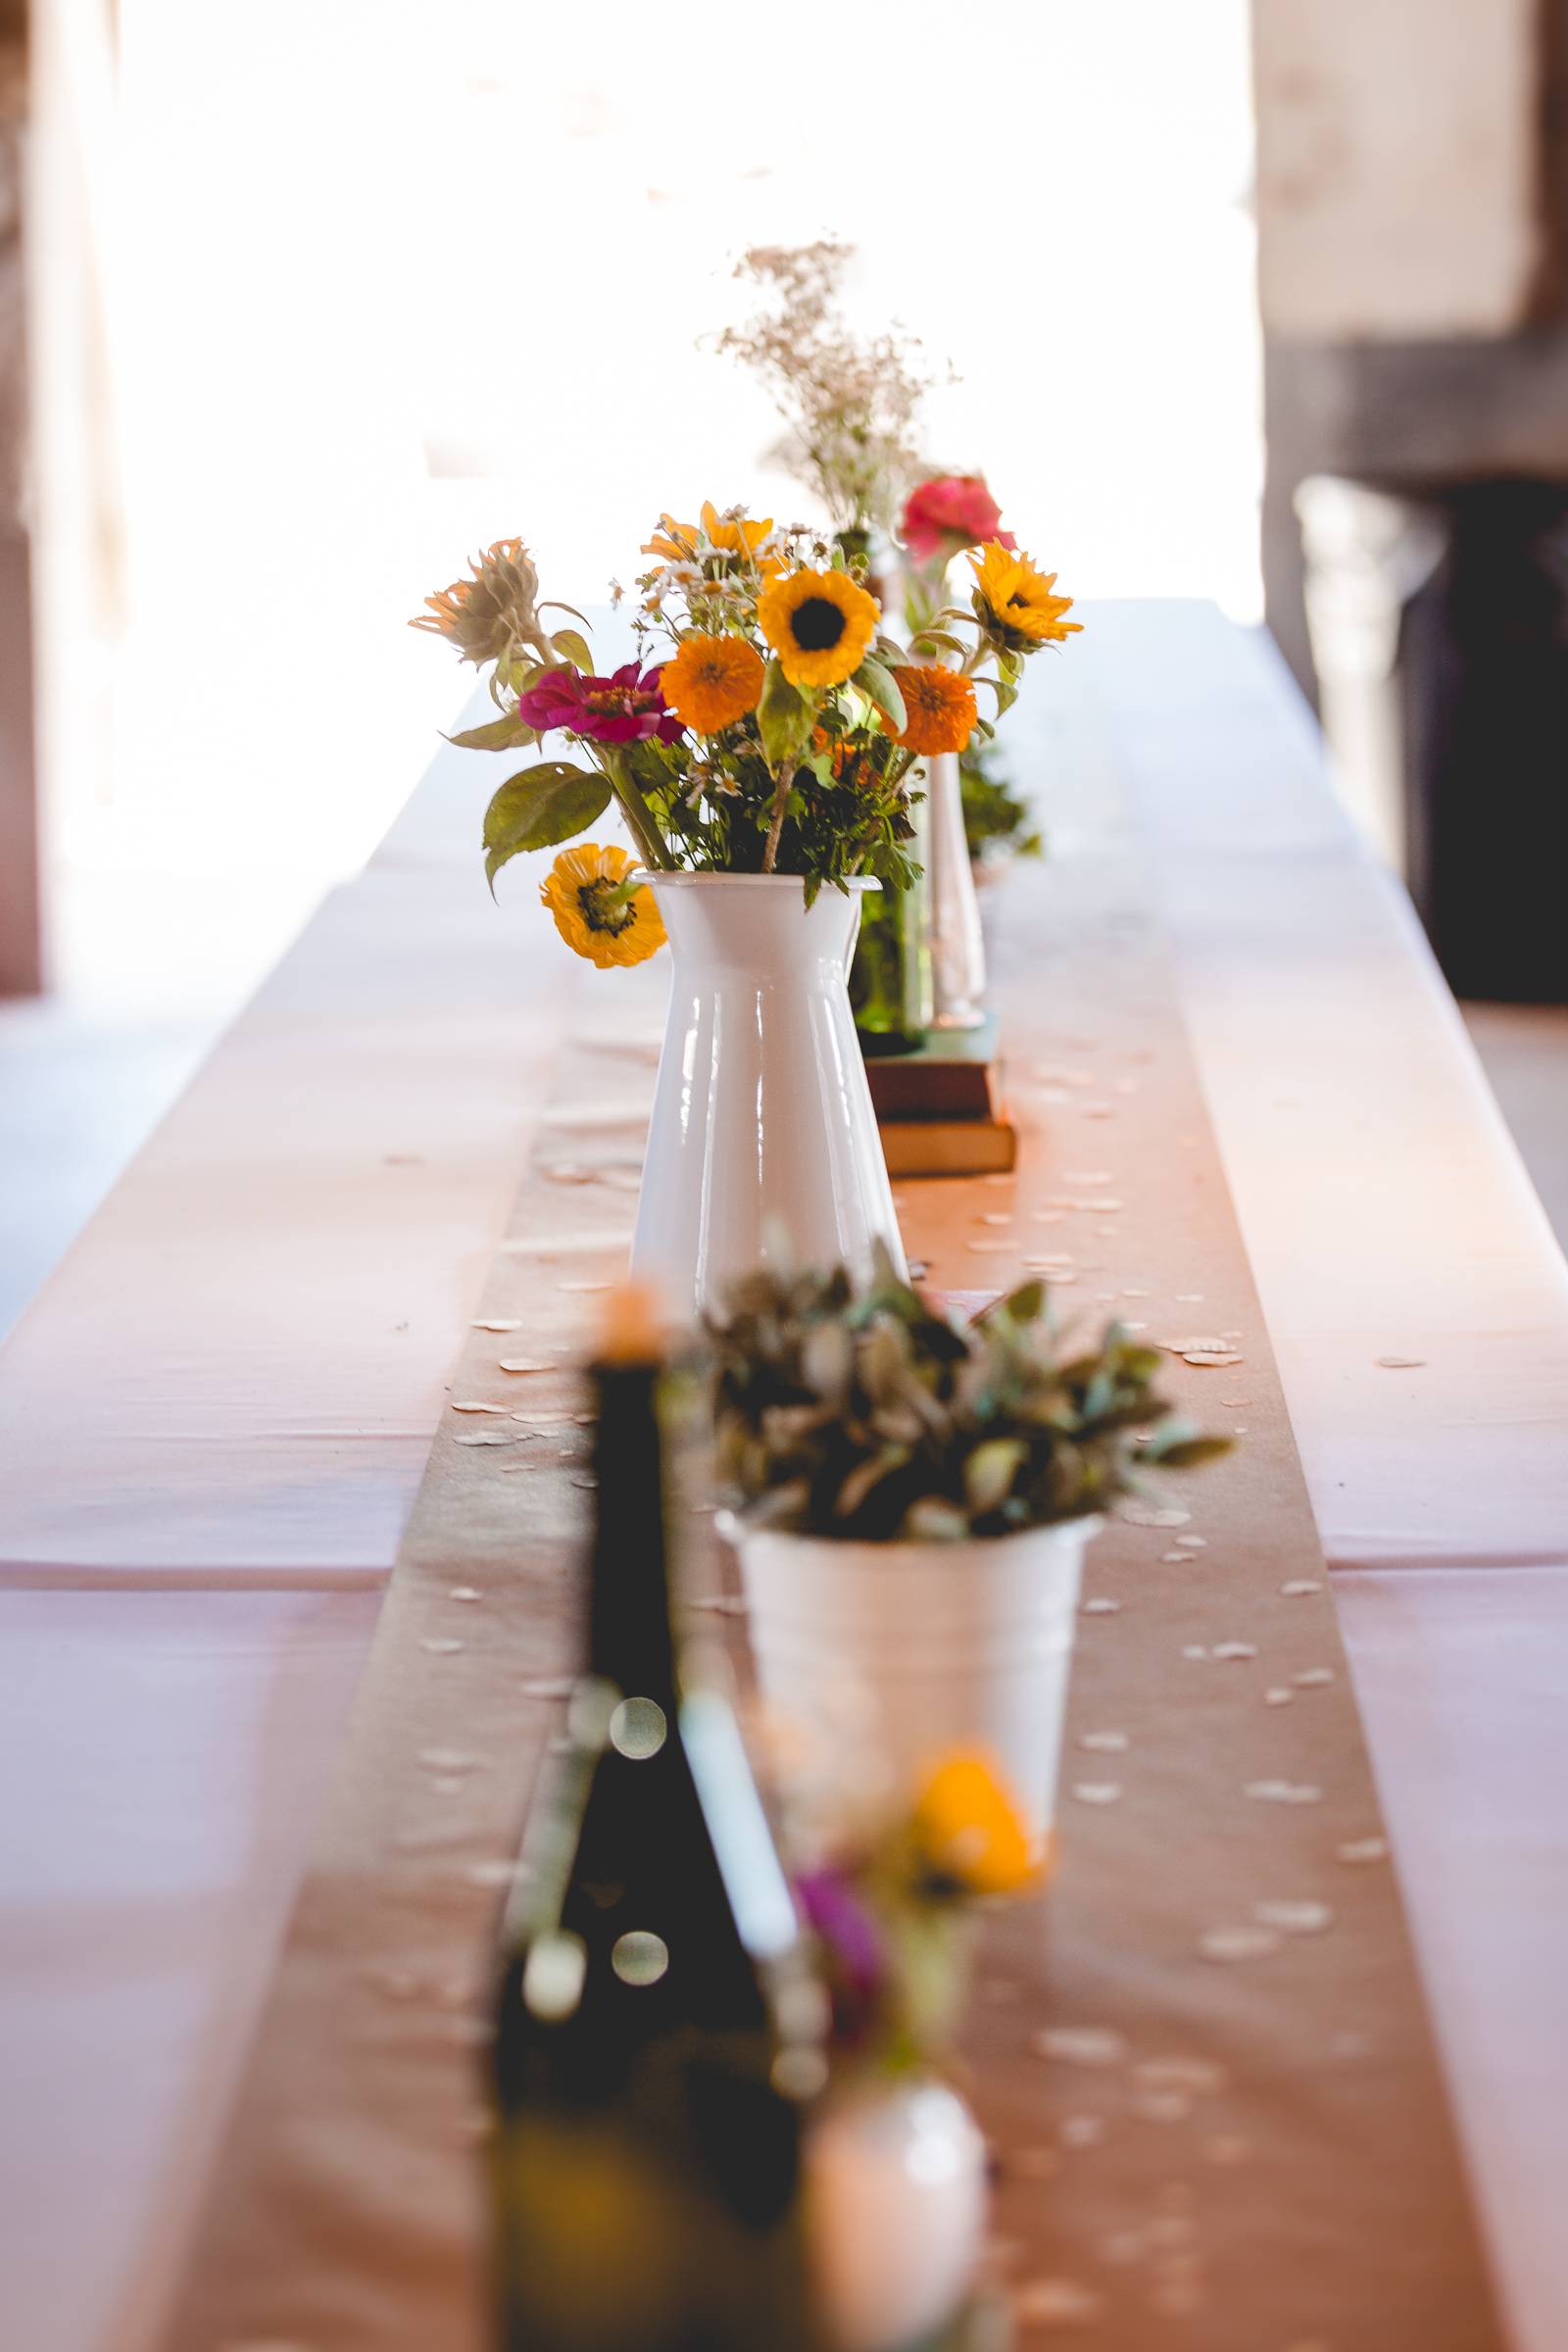 simple rustic centerpiece, centerpieces, white vases, potted plants wedding flowers